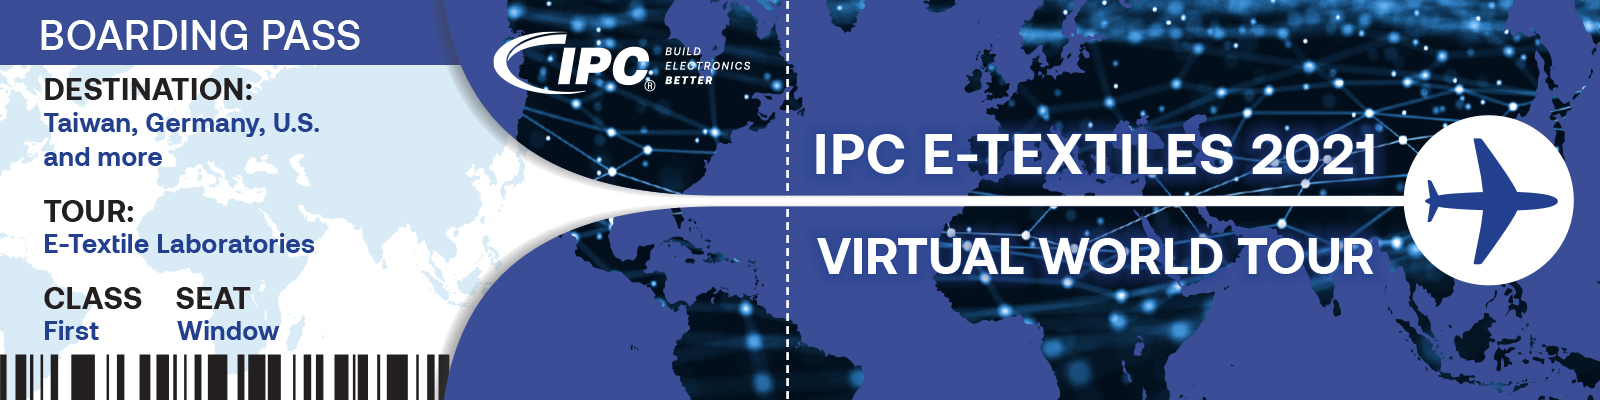 IPC E-Textiles 2021 Virtual World Tour Large Banner